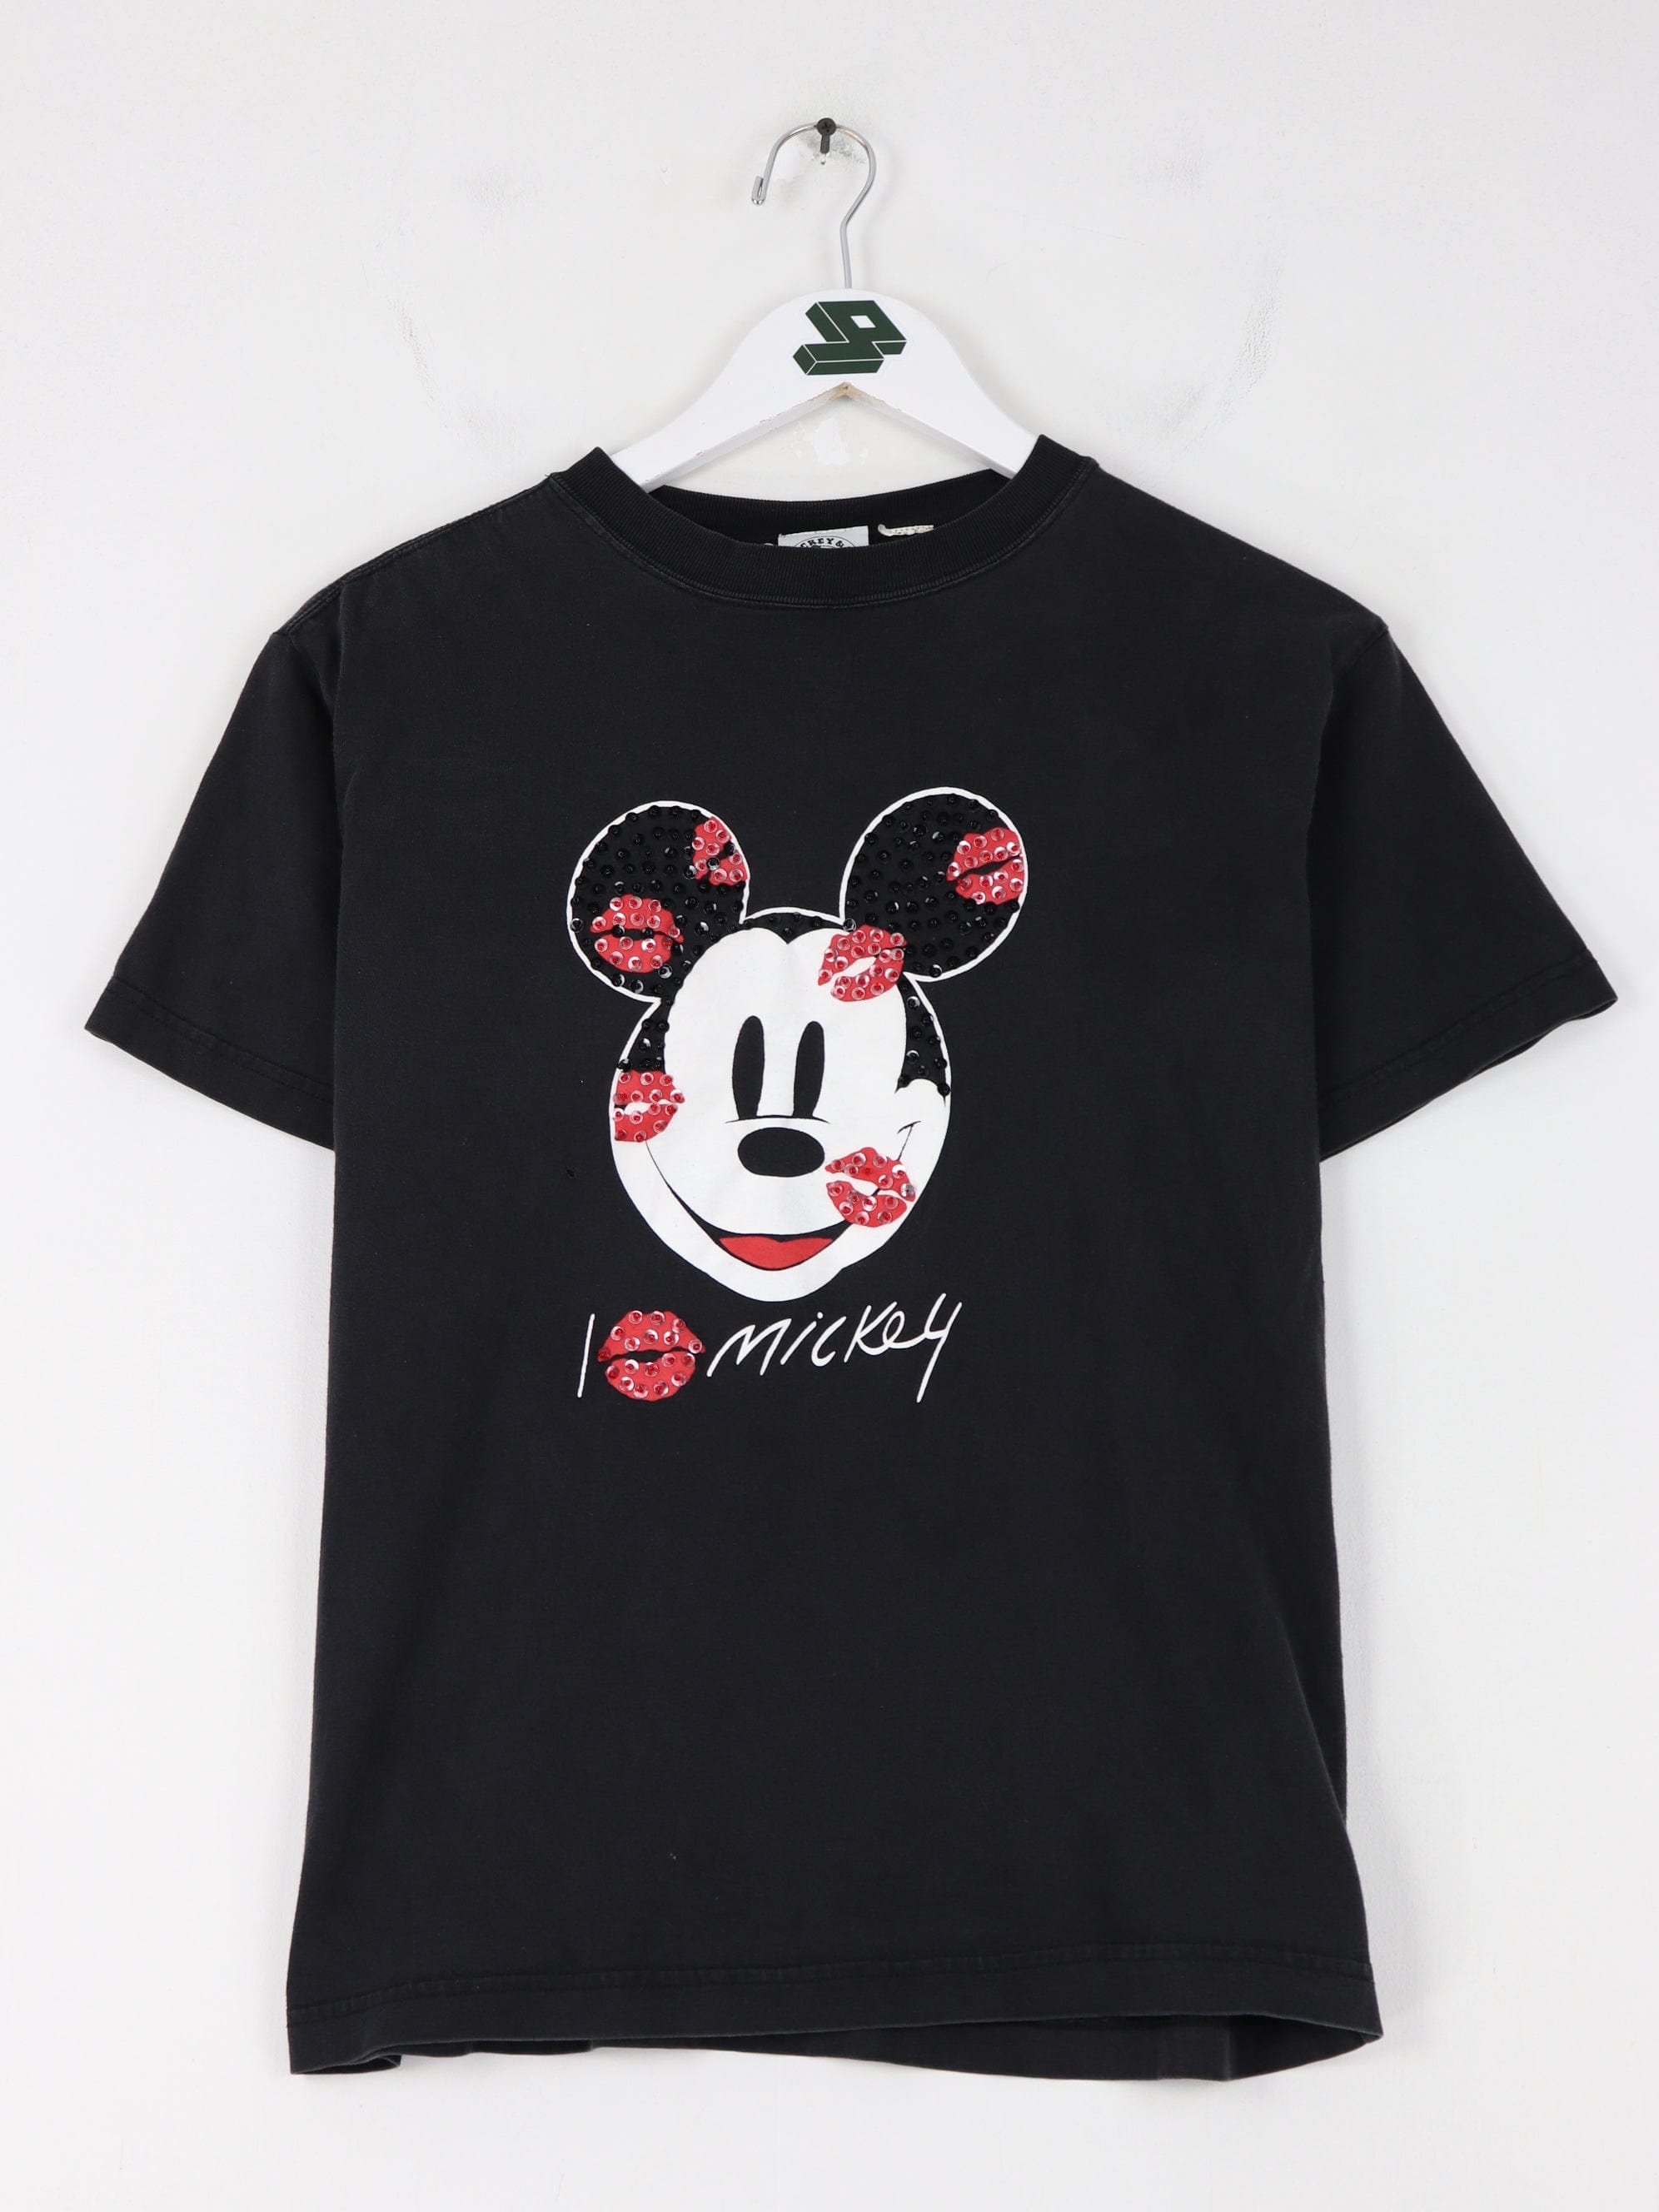 Vintage Disney T Shirt Womens Small Black Rhinestones Mickey Mouse